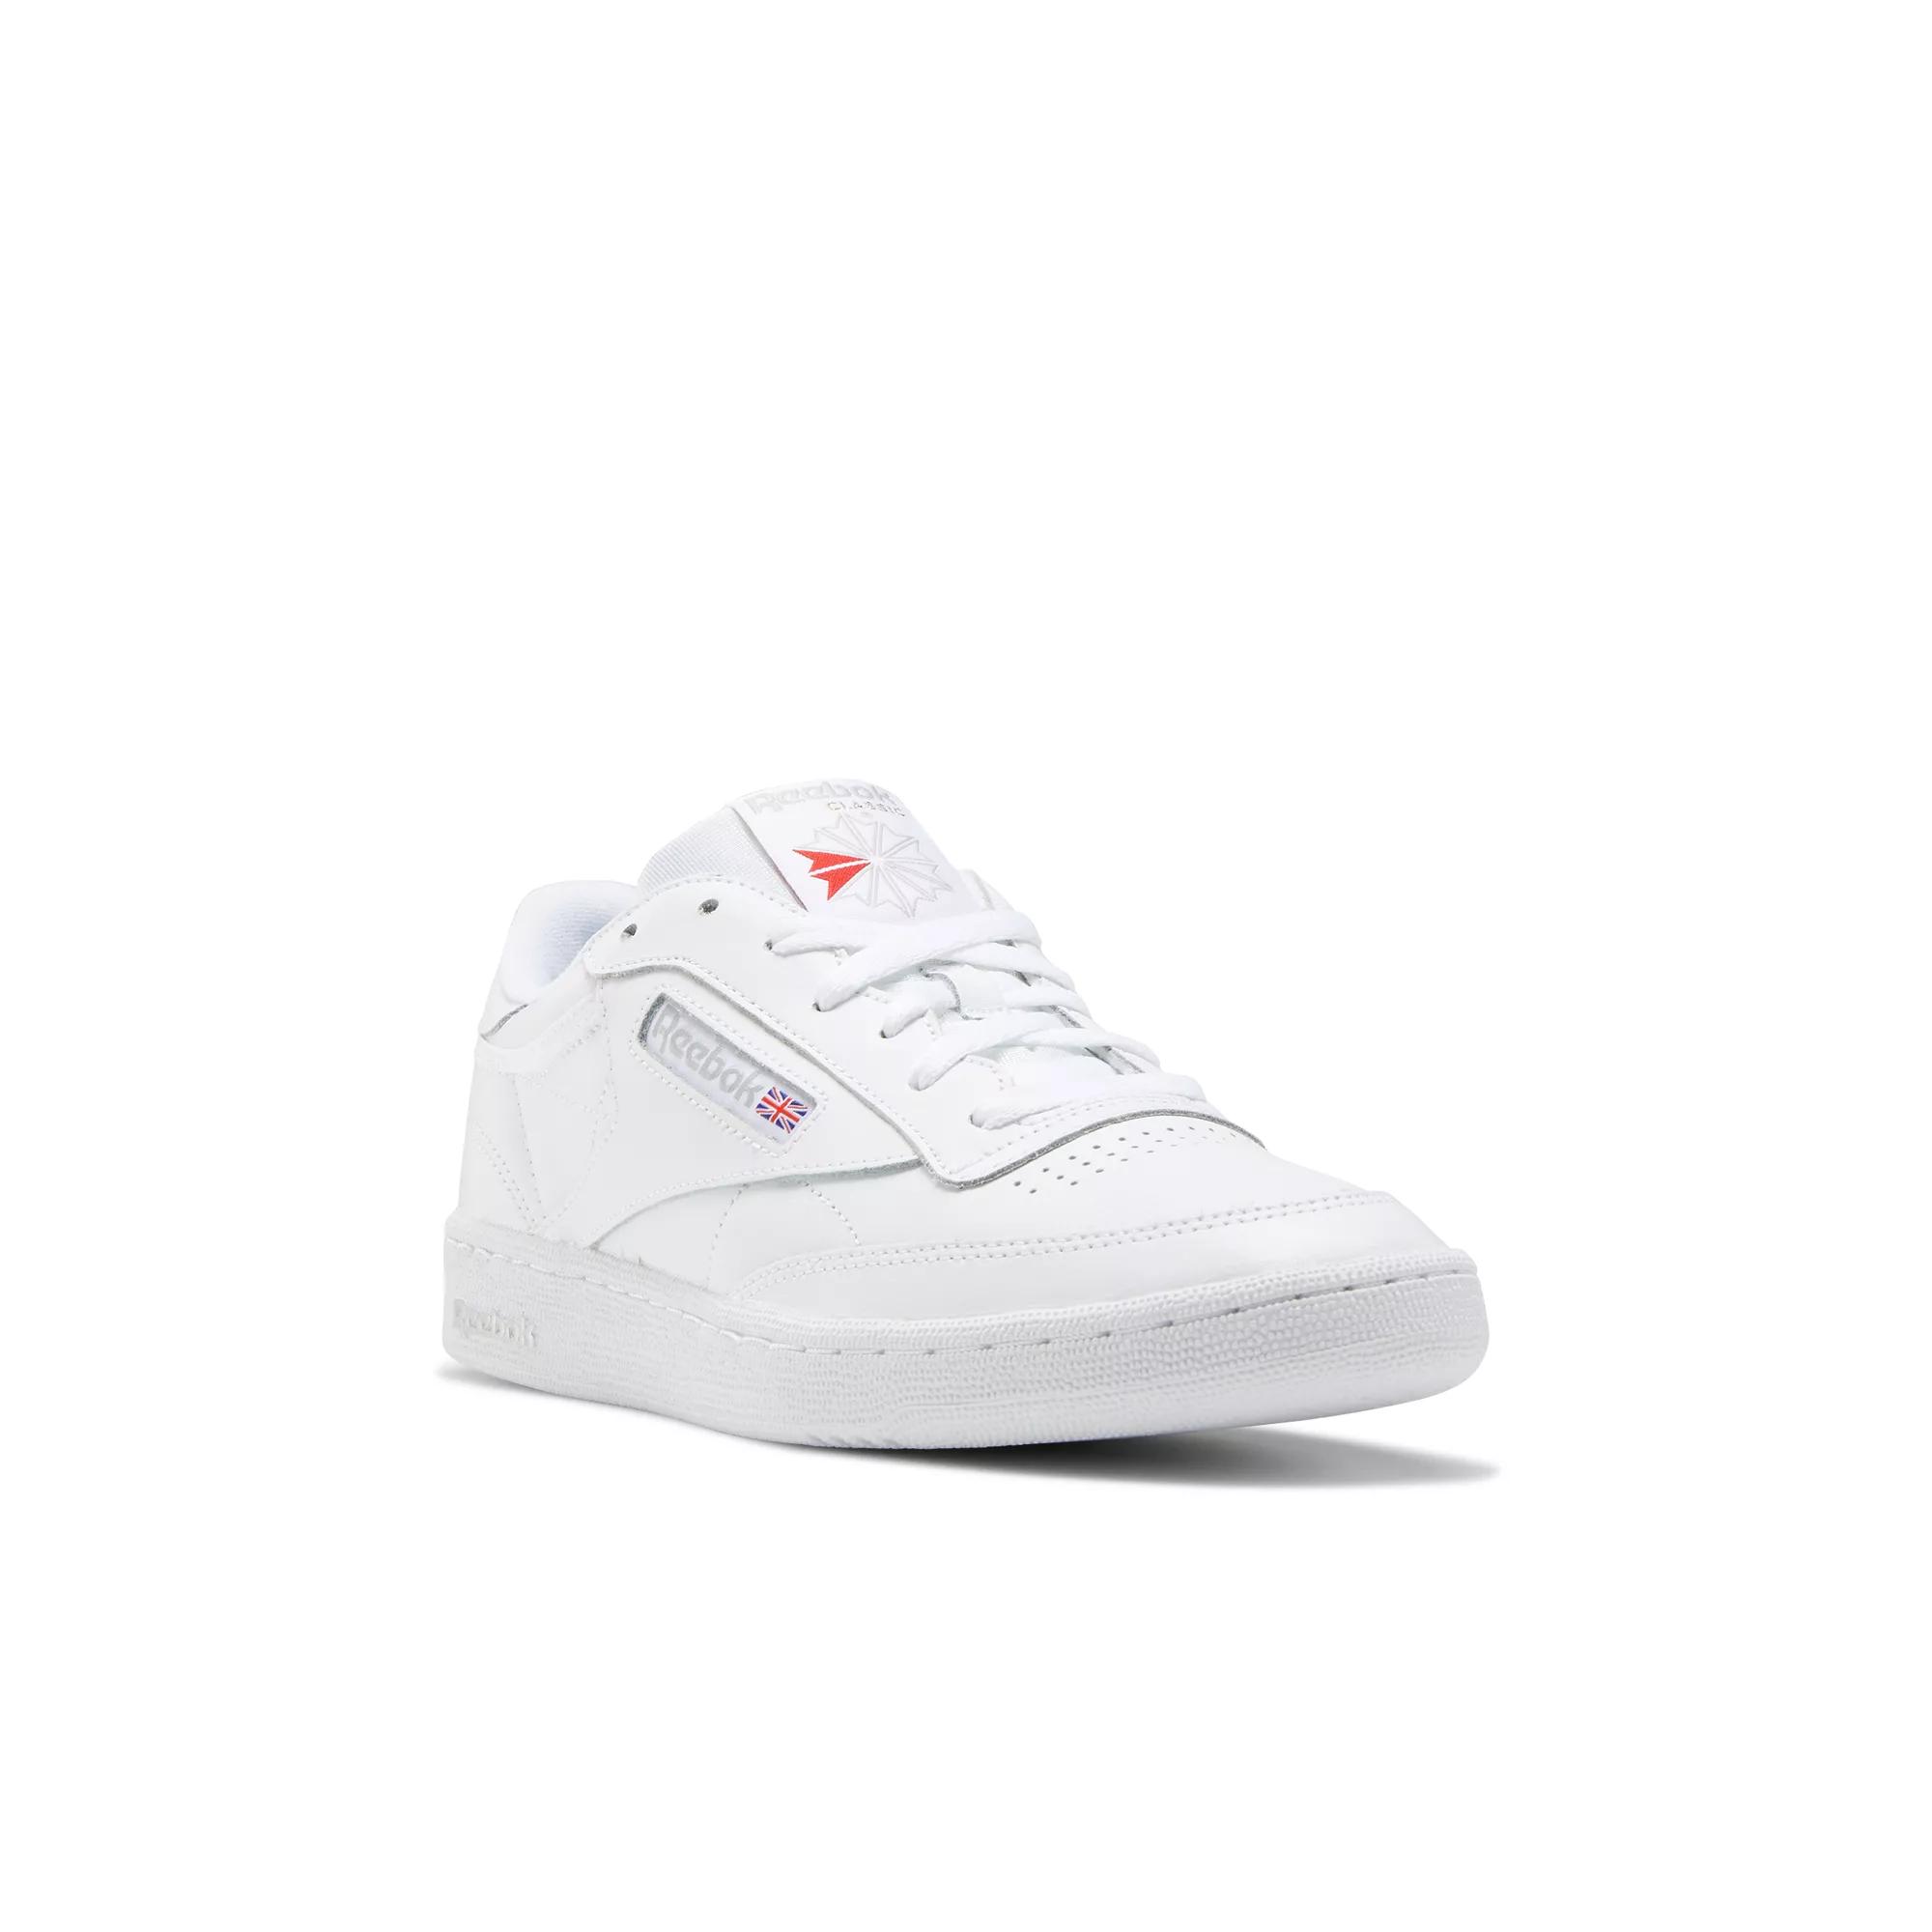 Club C 85 Shoes - White / Sheer Grey | Reebok | Sneaker low